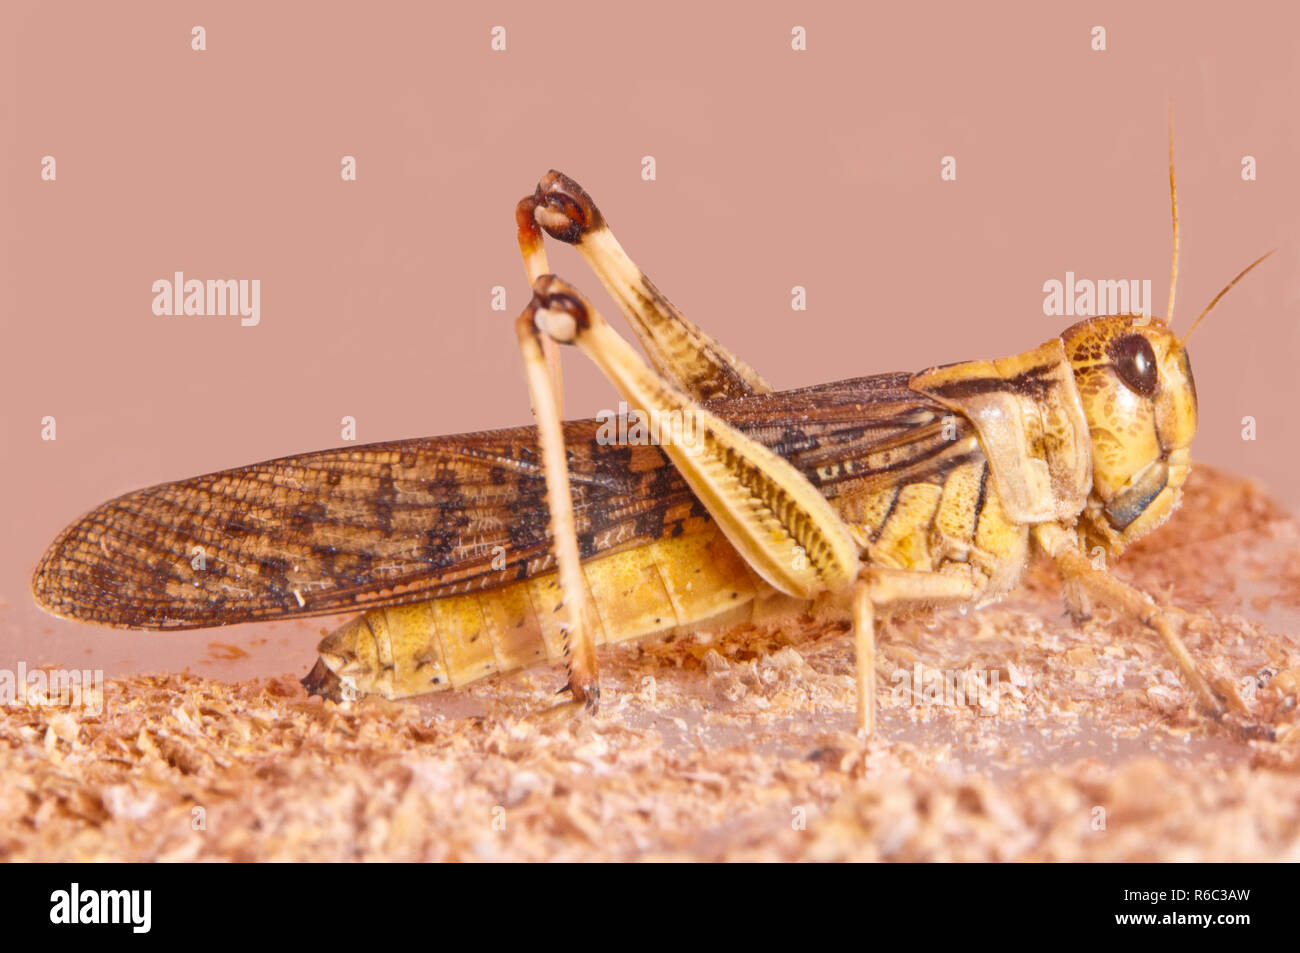 Stock photo of A nymph or hopper of migratory locust (Locusta